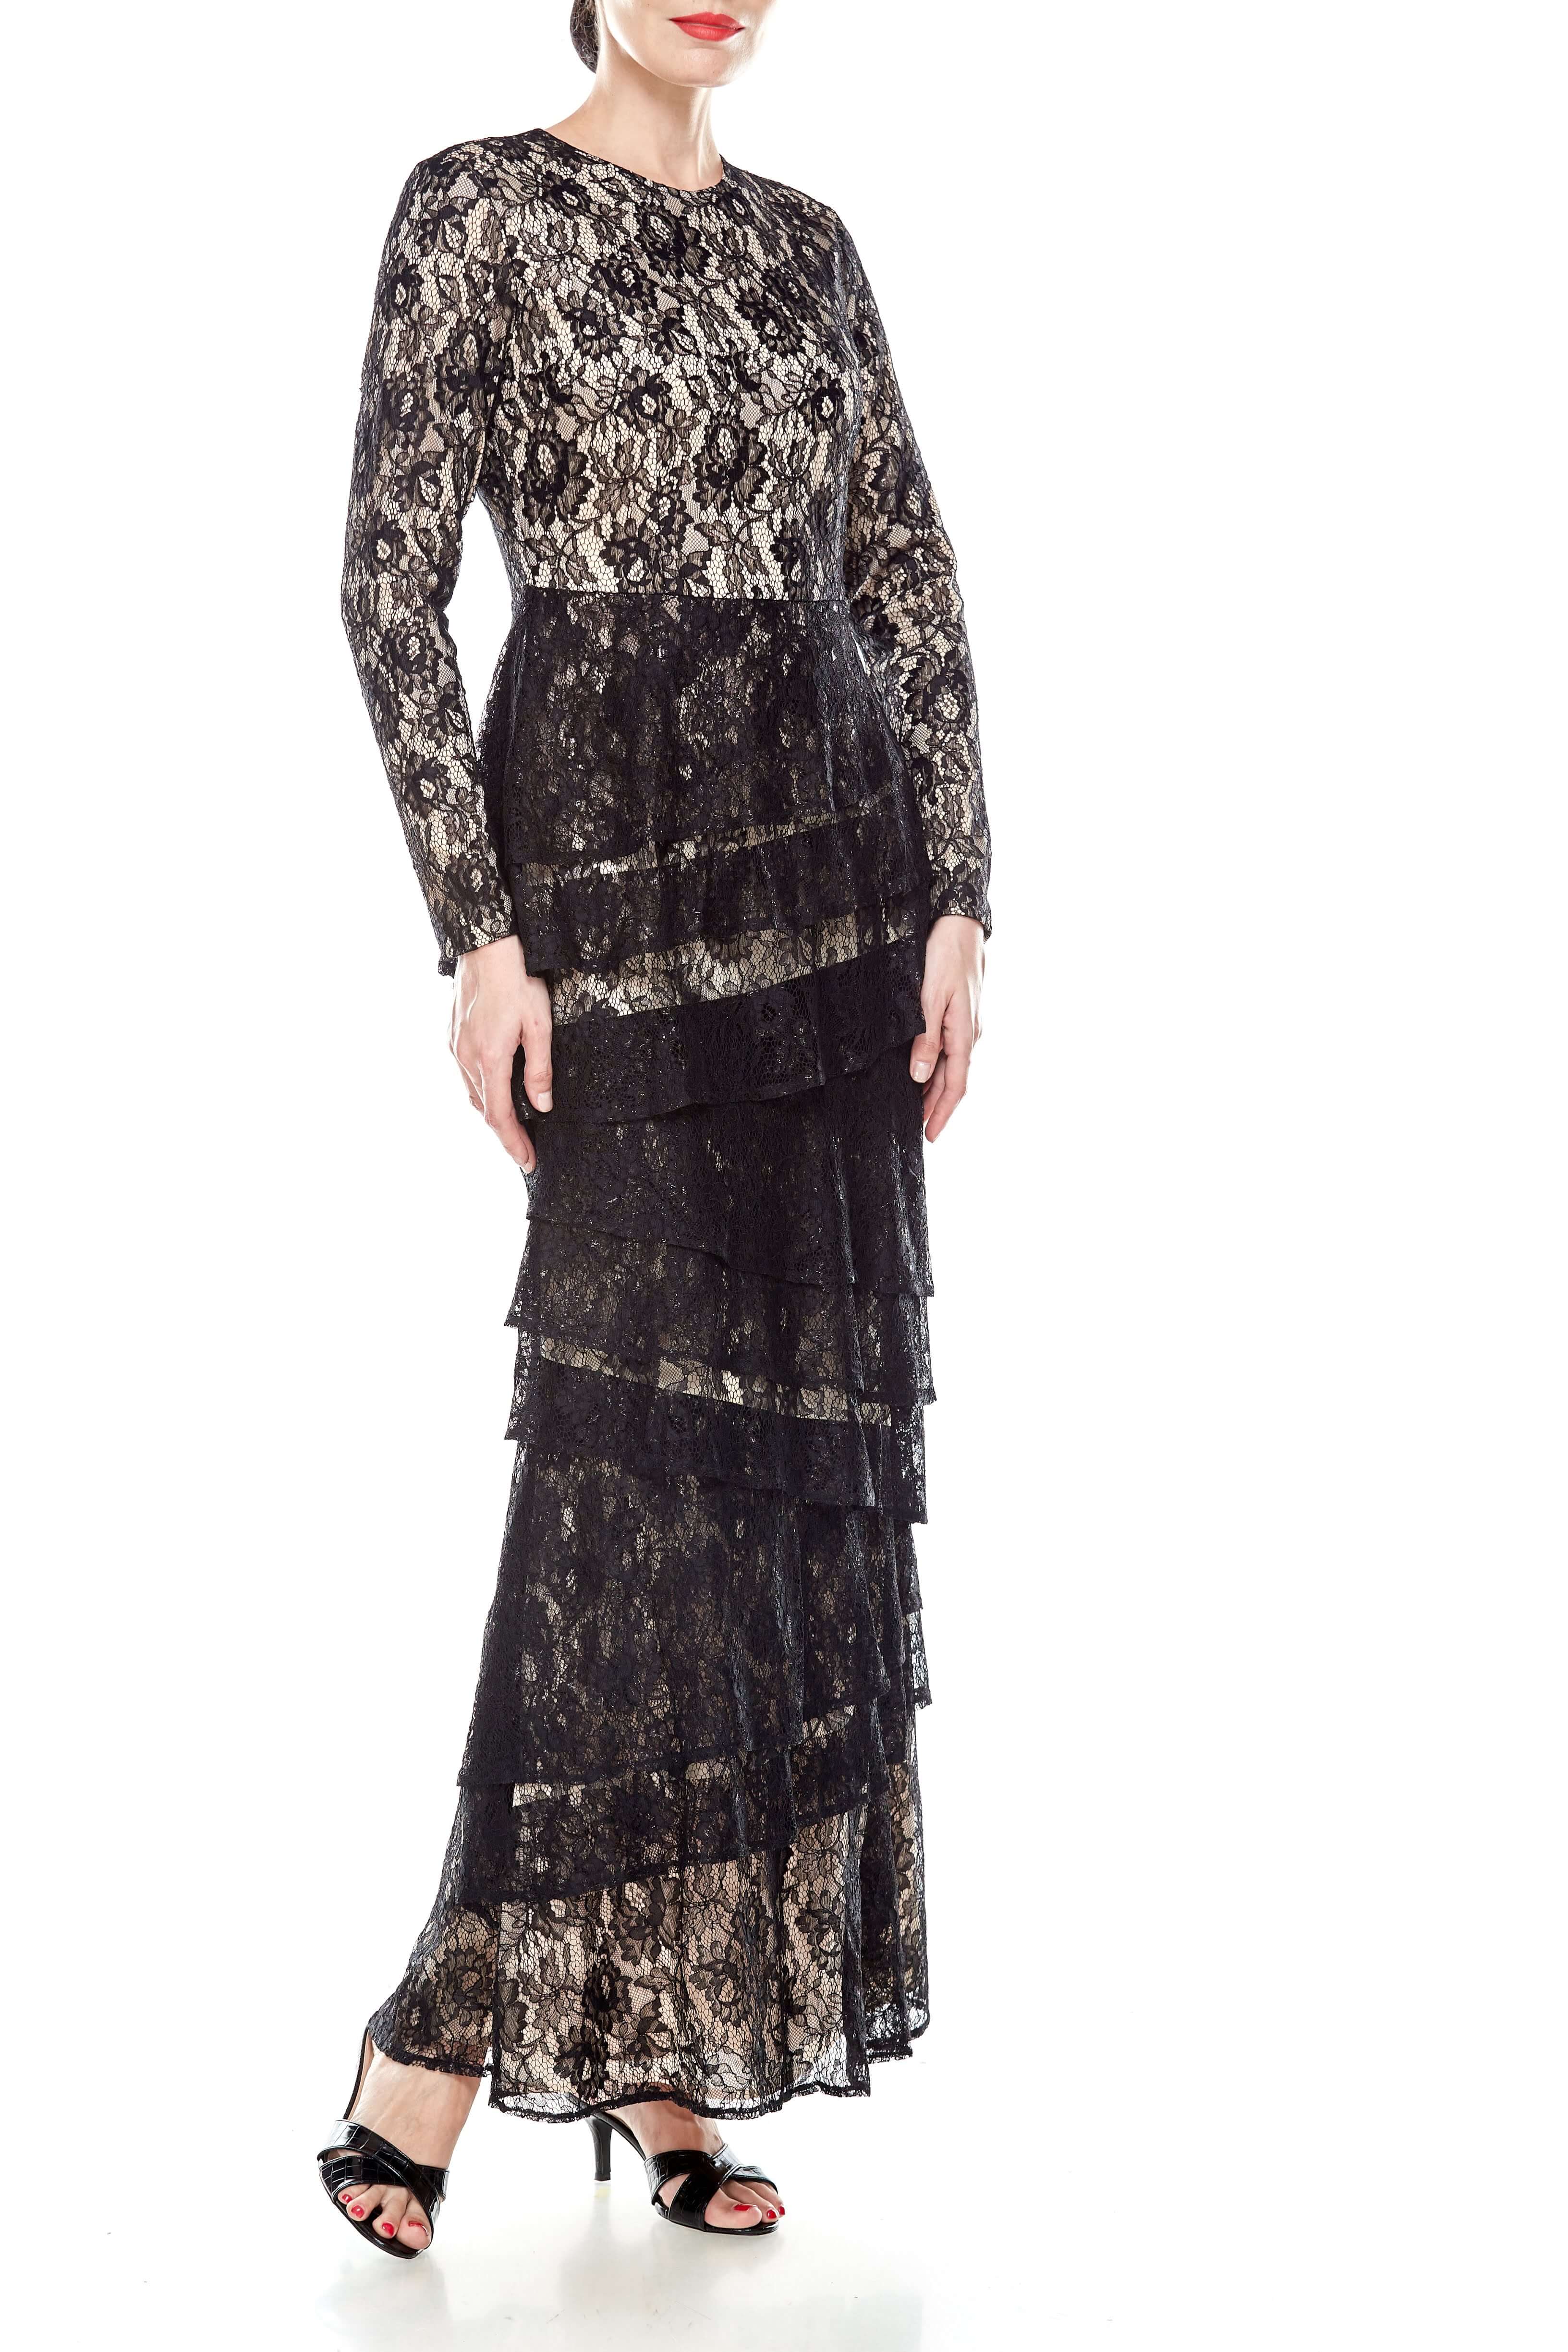 Bella Black Lace Dress (2)